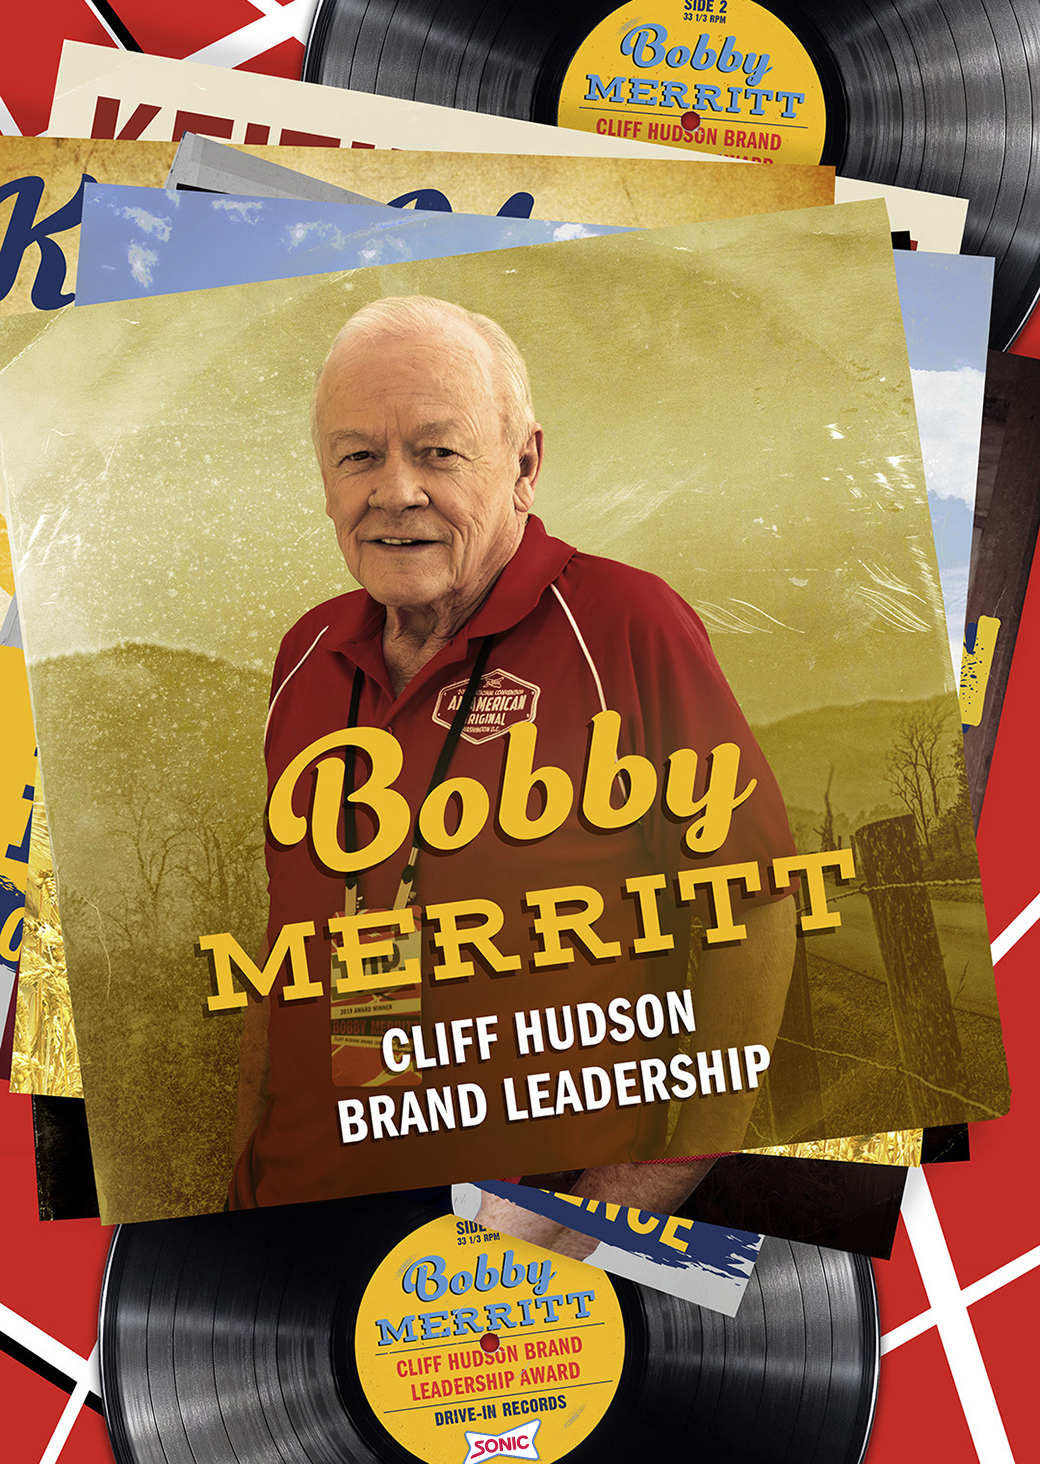 Cliff Hudson Brand Leadership